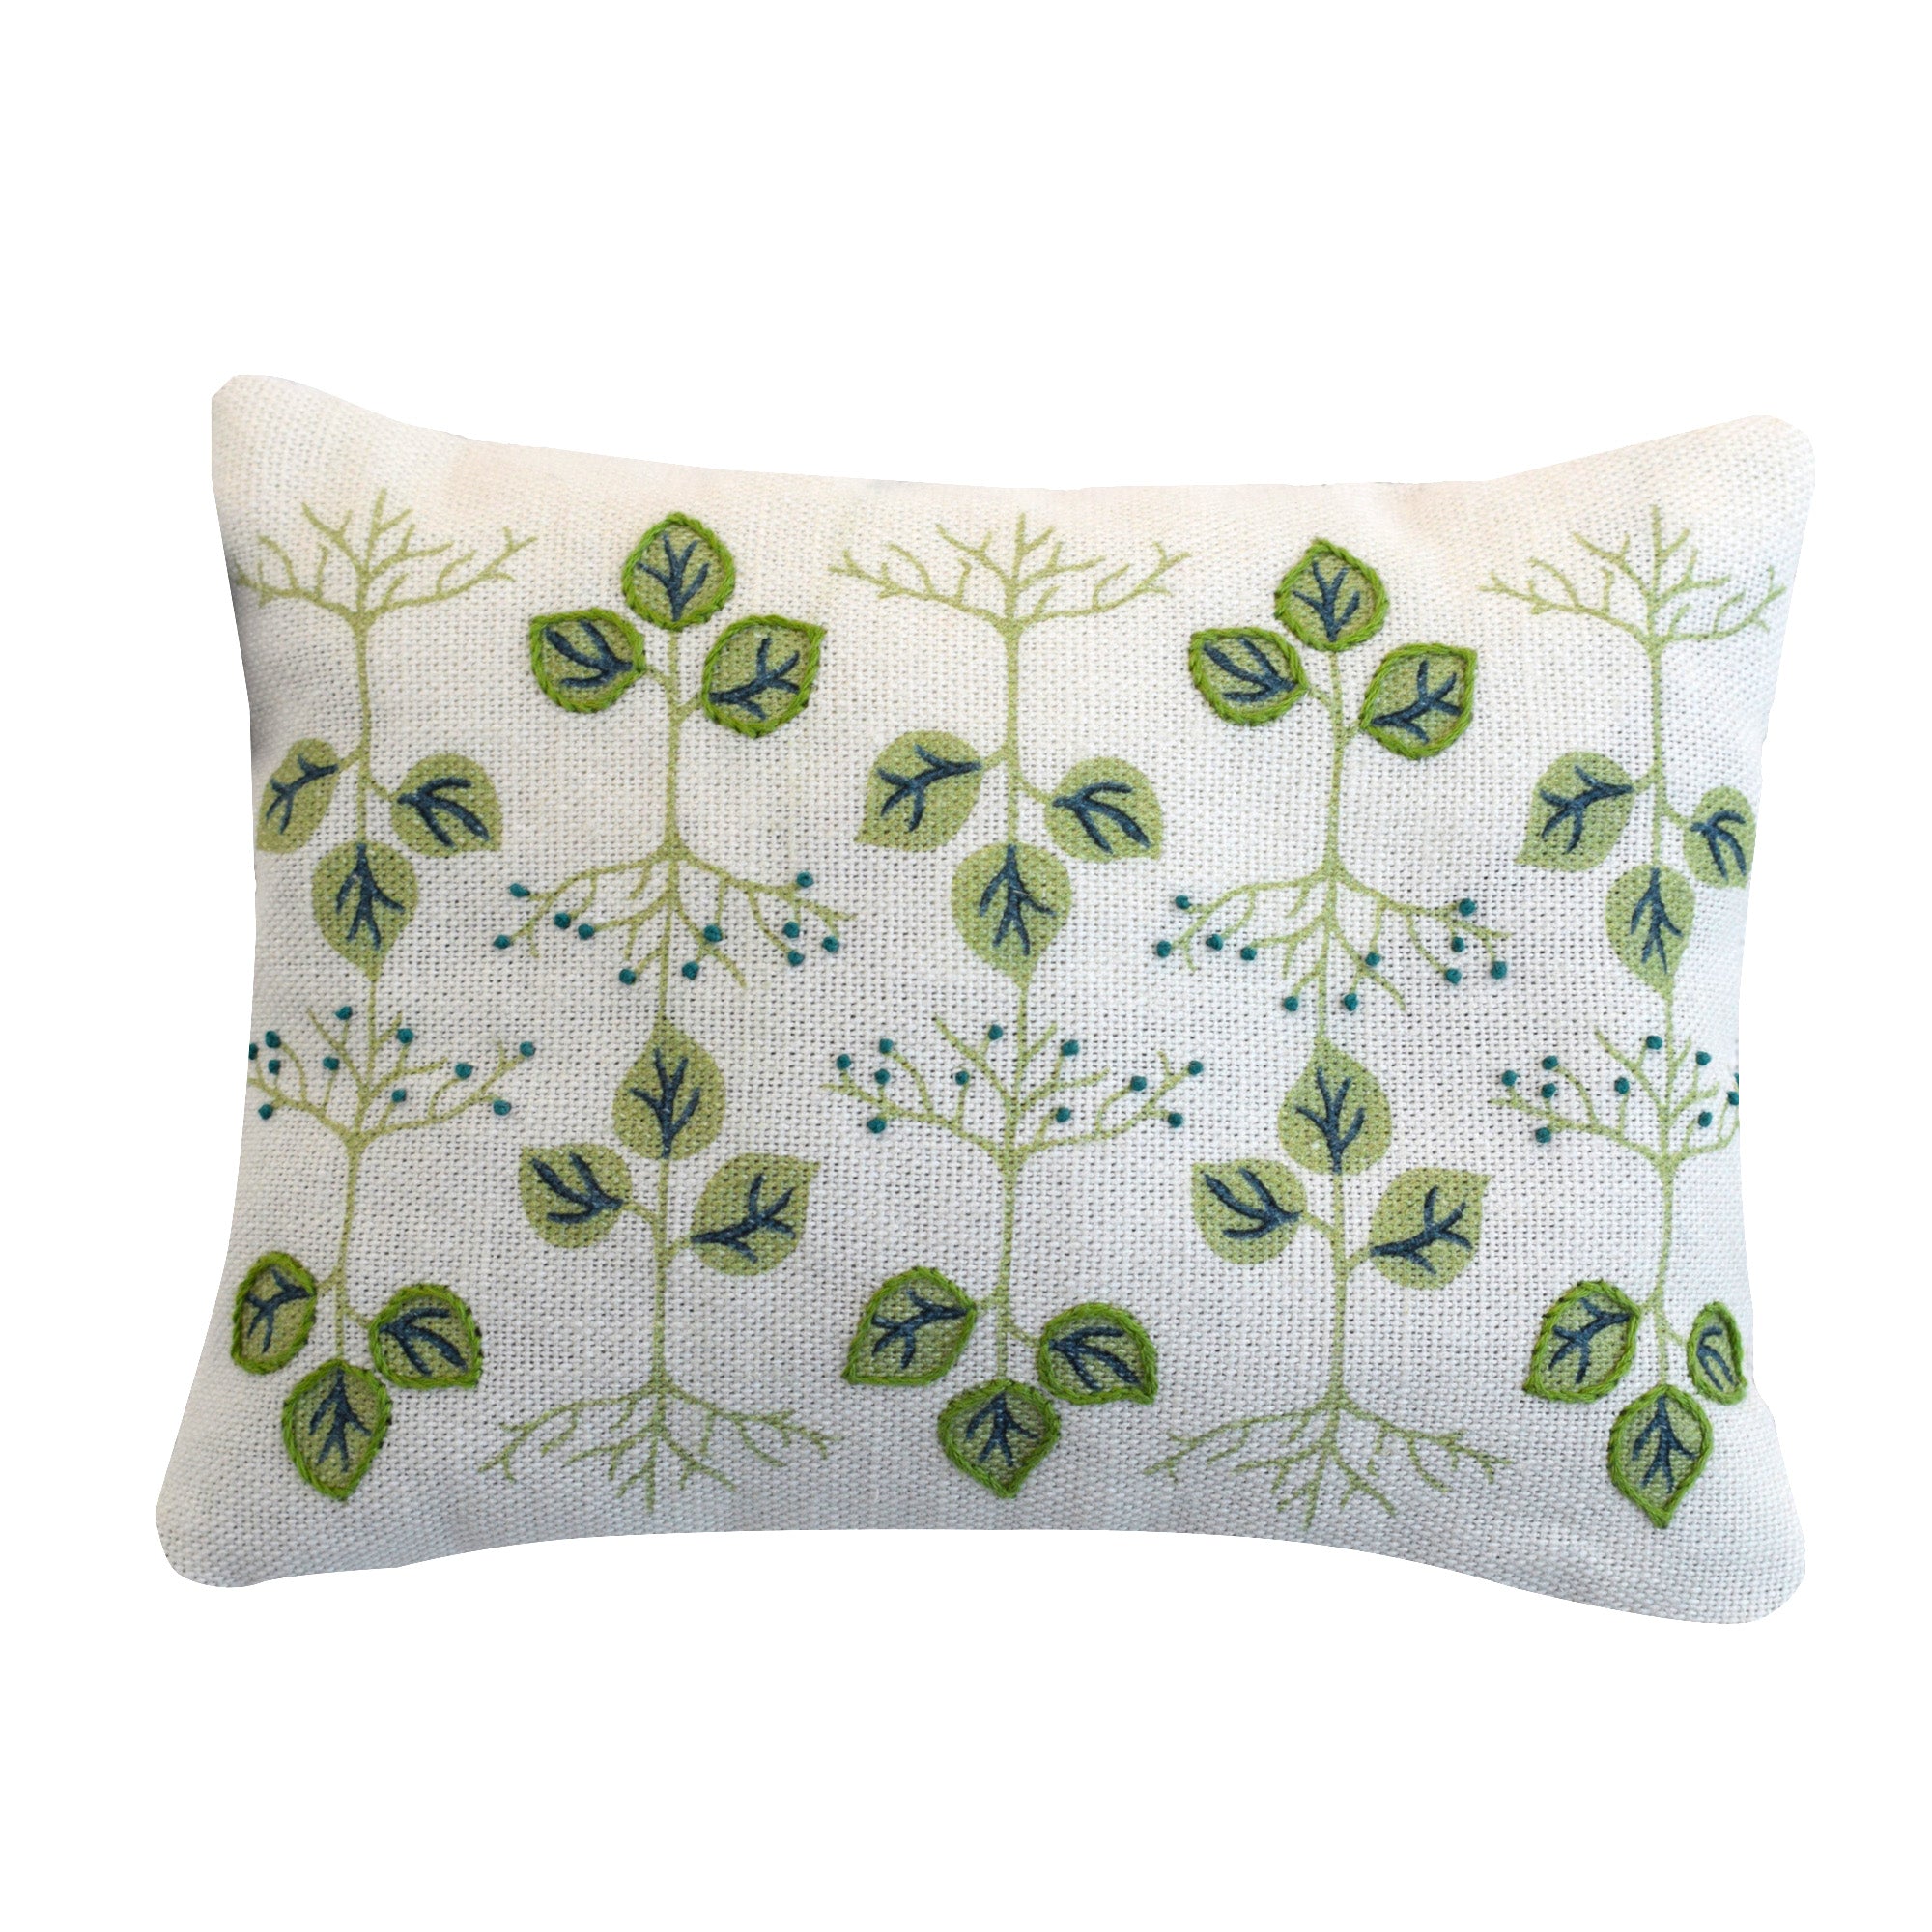 JoyofPrint-hand-Embroidered-Green-Sprigs-Lav-Bag.jpg